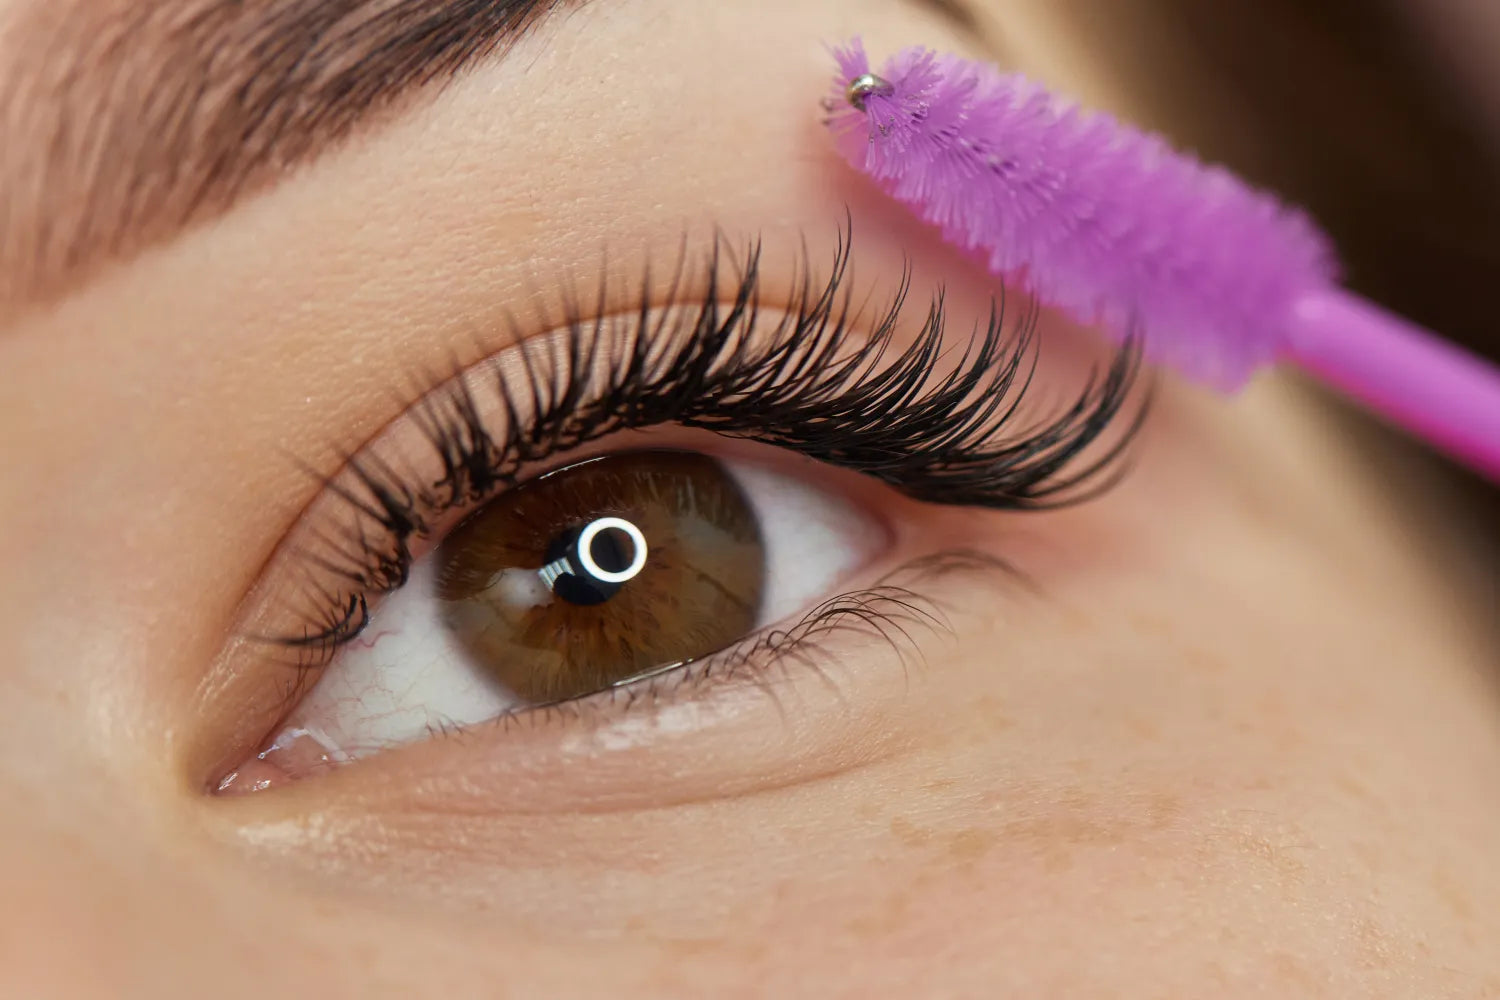 How Long Do Eyelash Extensions Take?